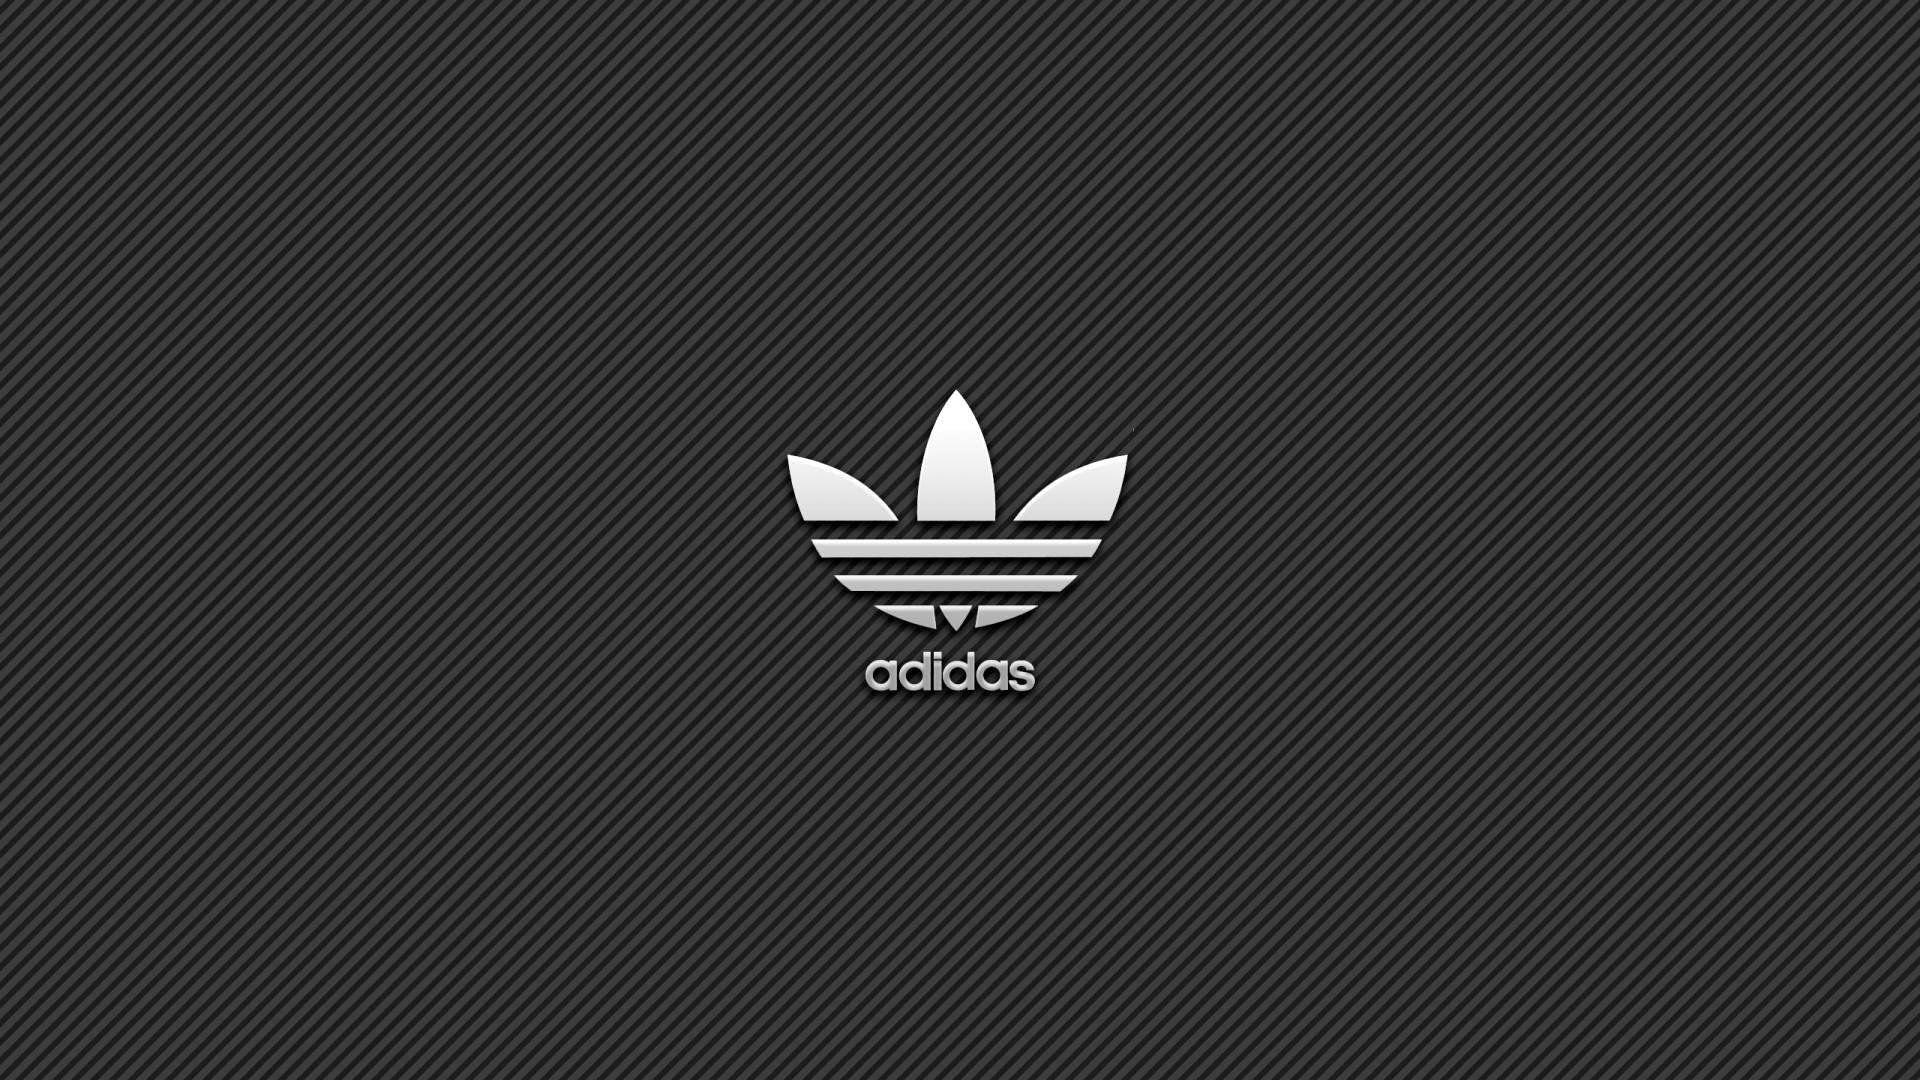 Adidas Originals Logo Wallpapers - Top 